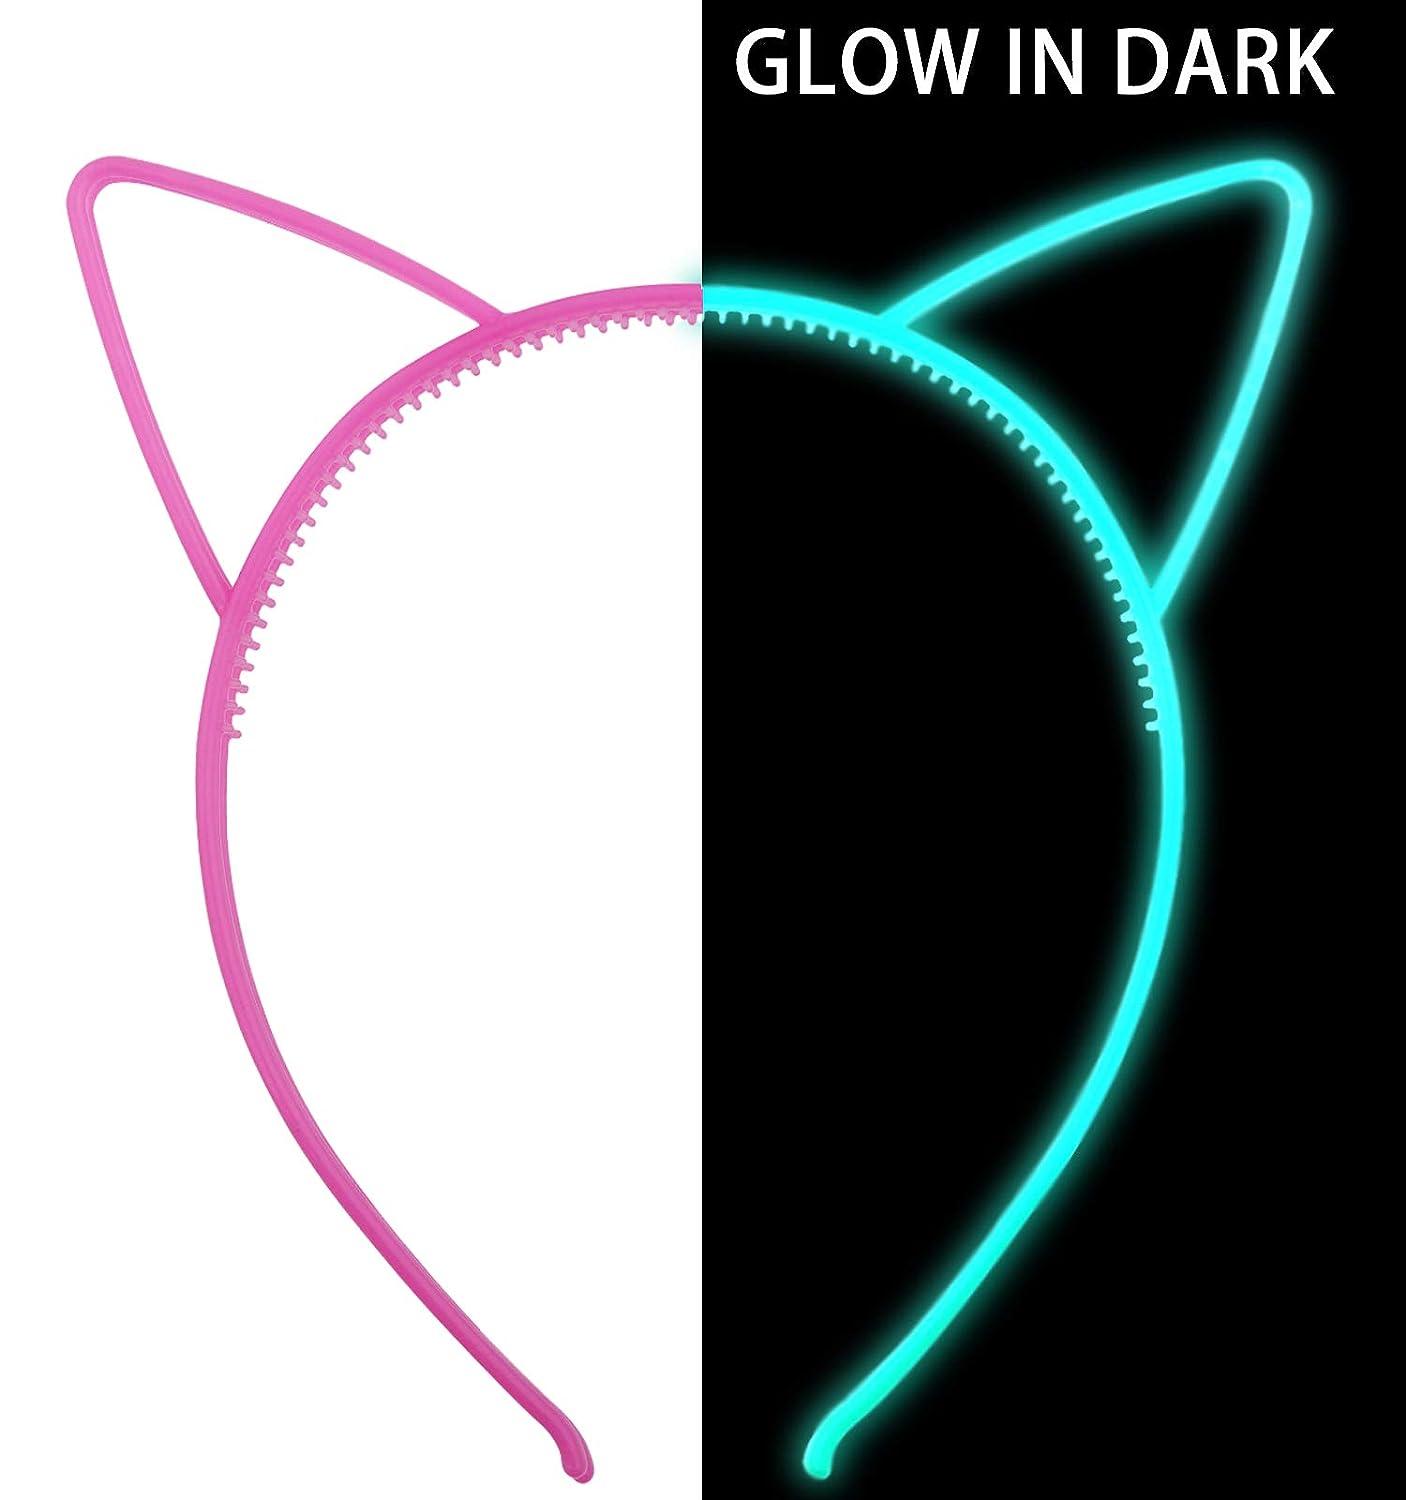 6PCS Glow Party Supplies Luminous Crown Headband Glow in the Dark